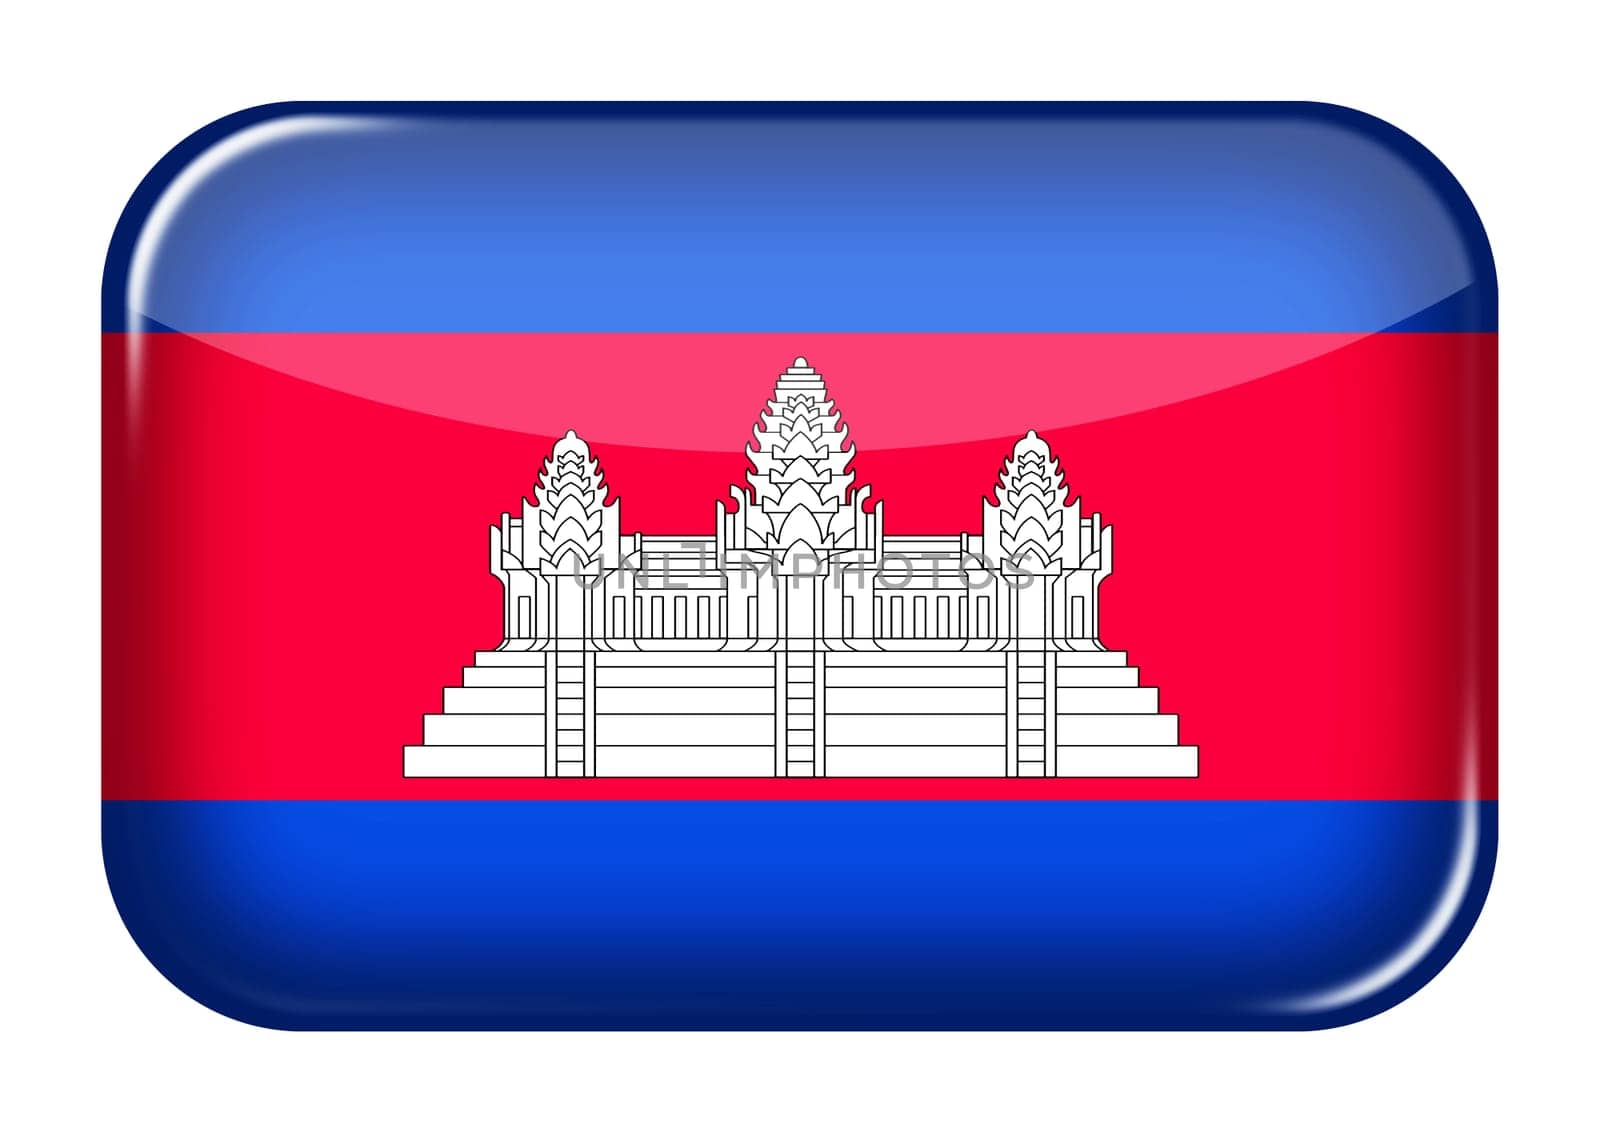 Cambodia web icon rectangle button by VivacityImages